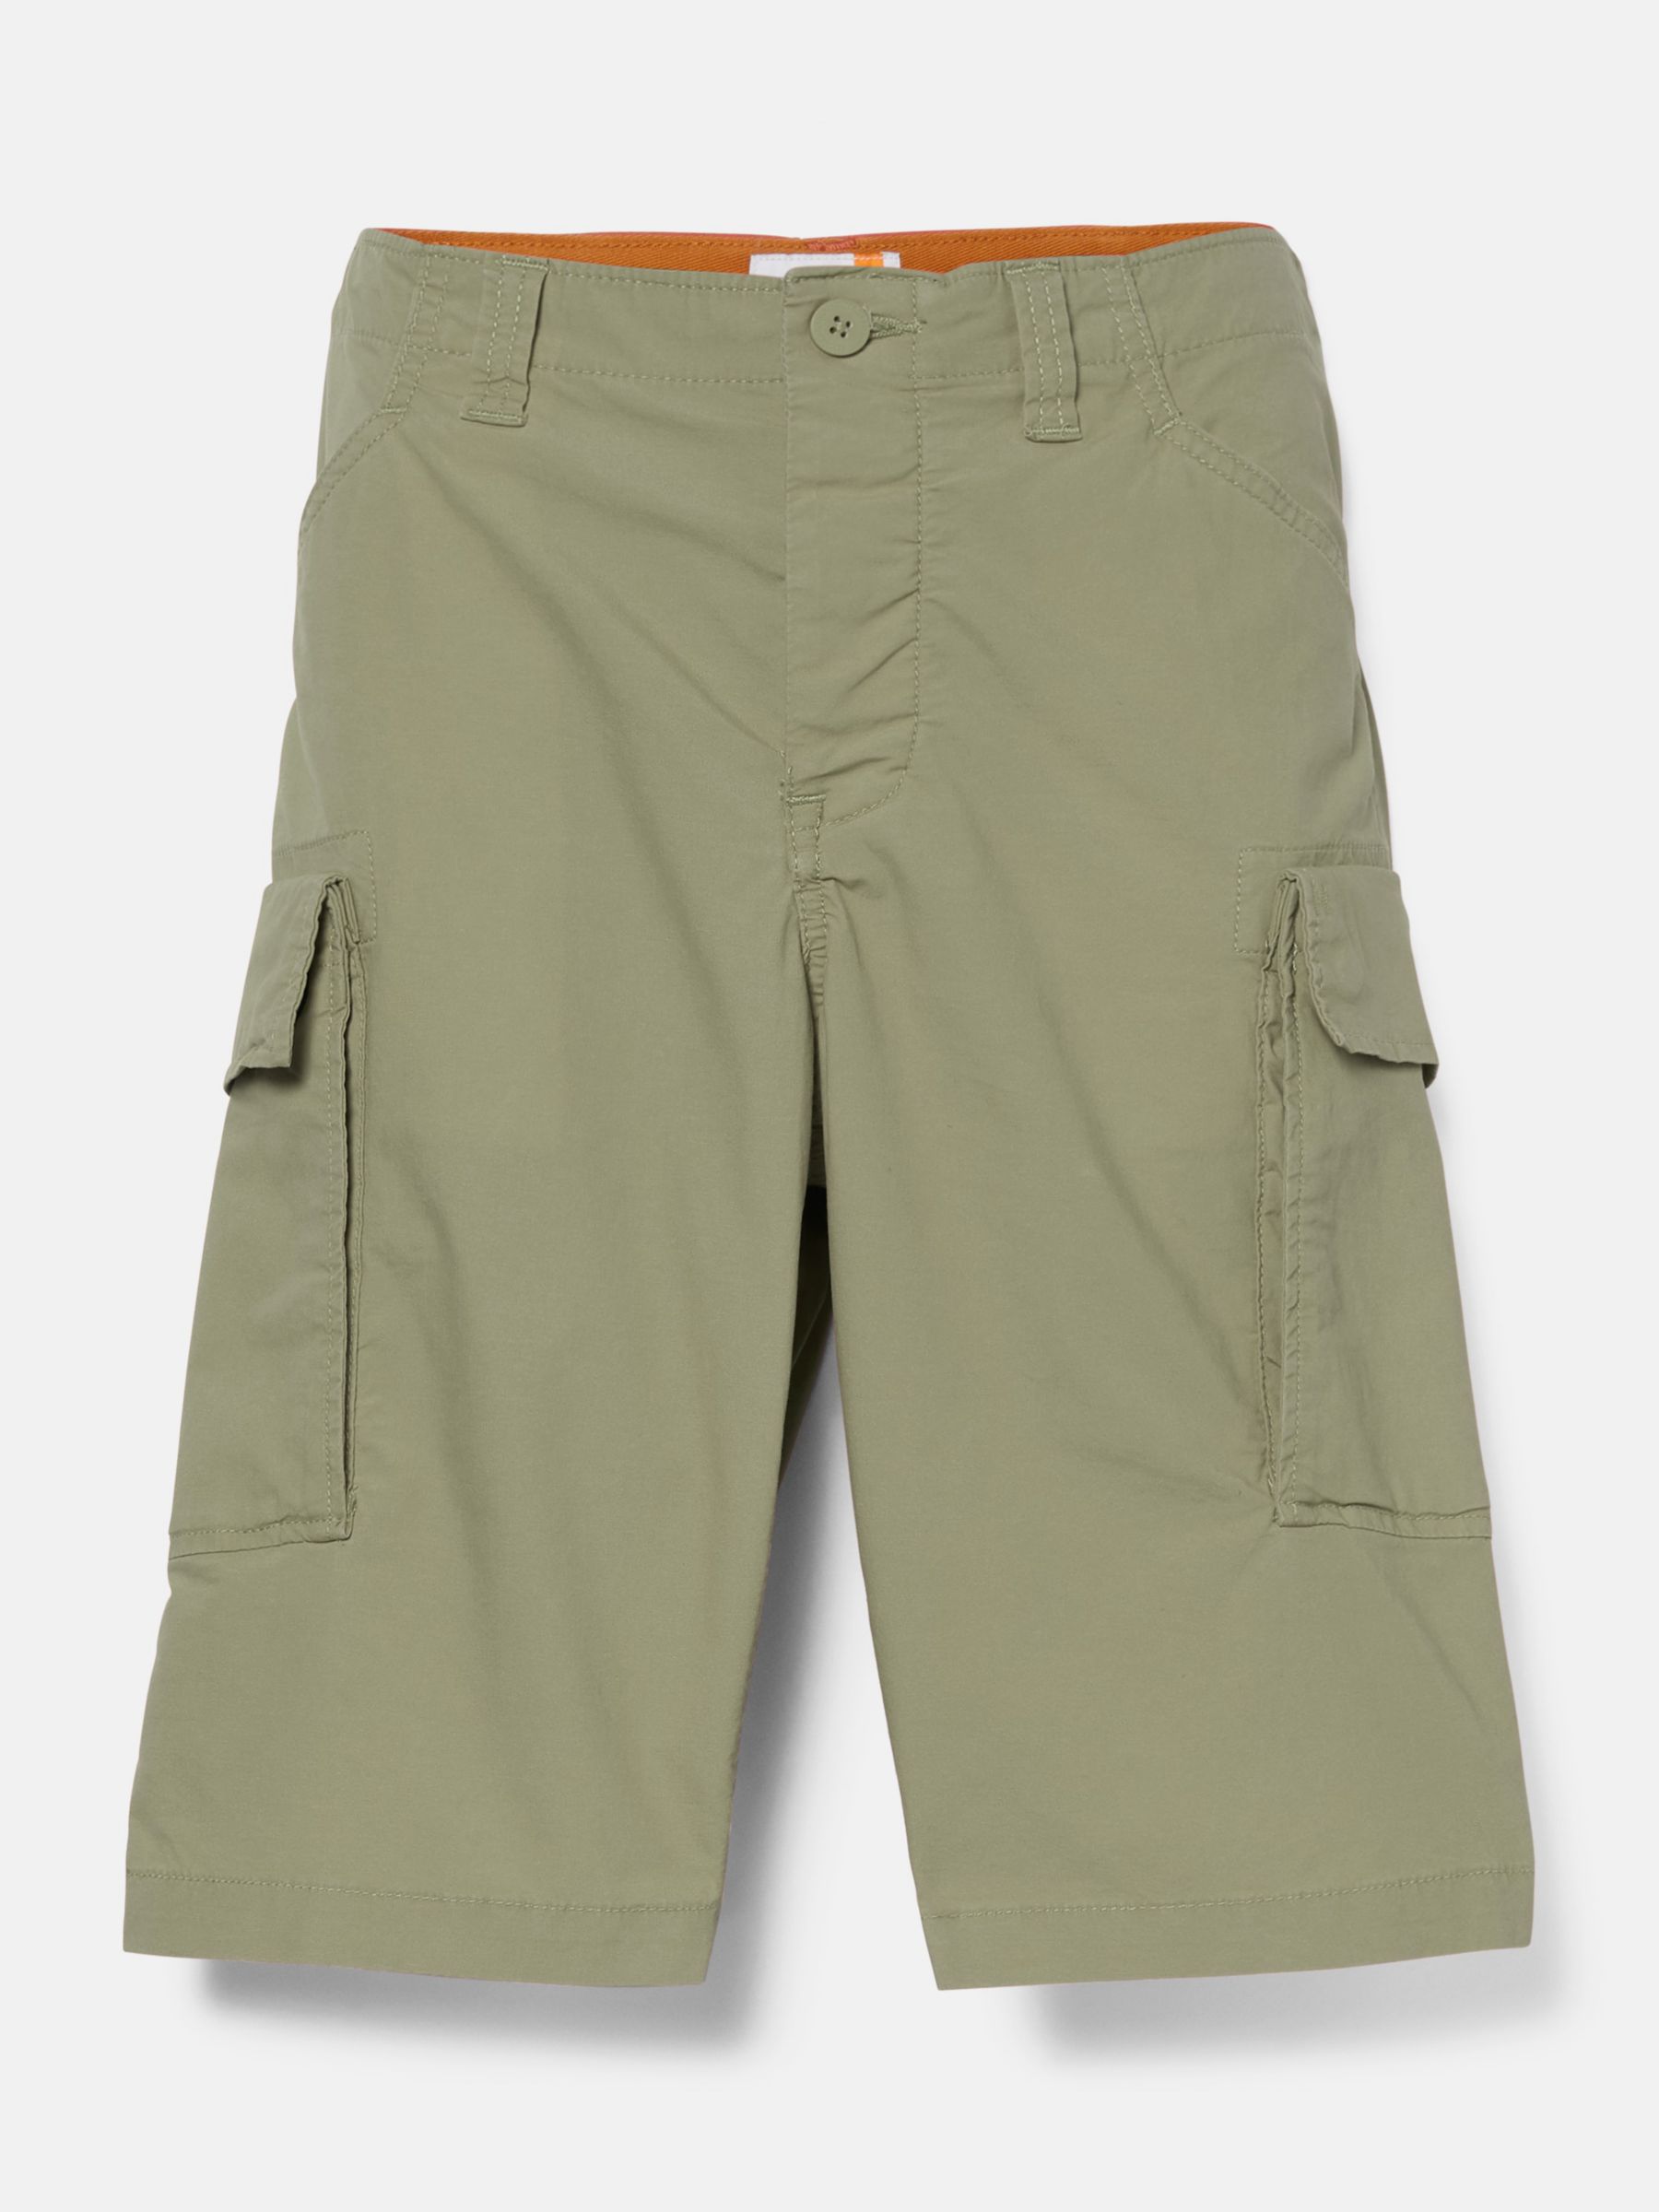 Timberland Poplin Cargo Shorts, KGRN, 30R